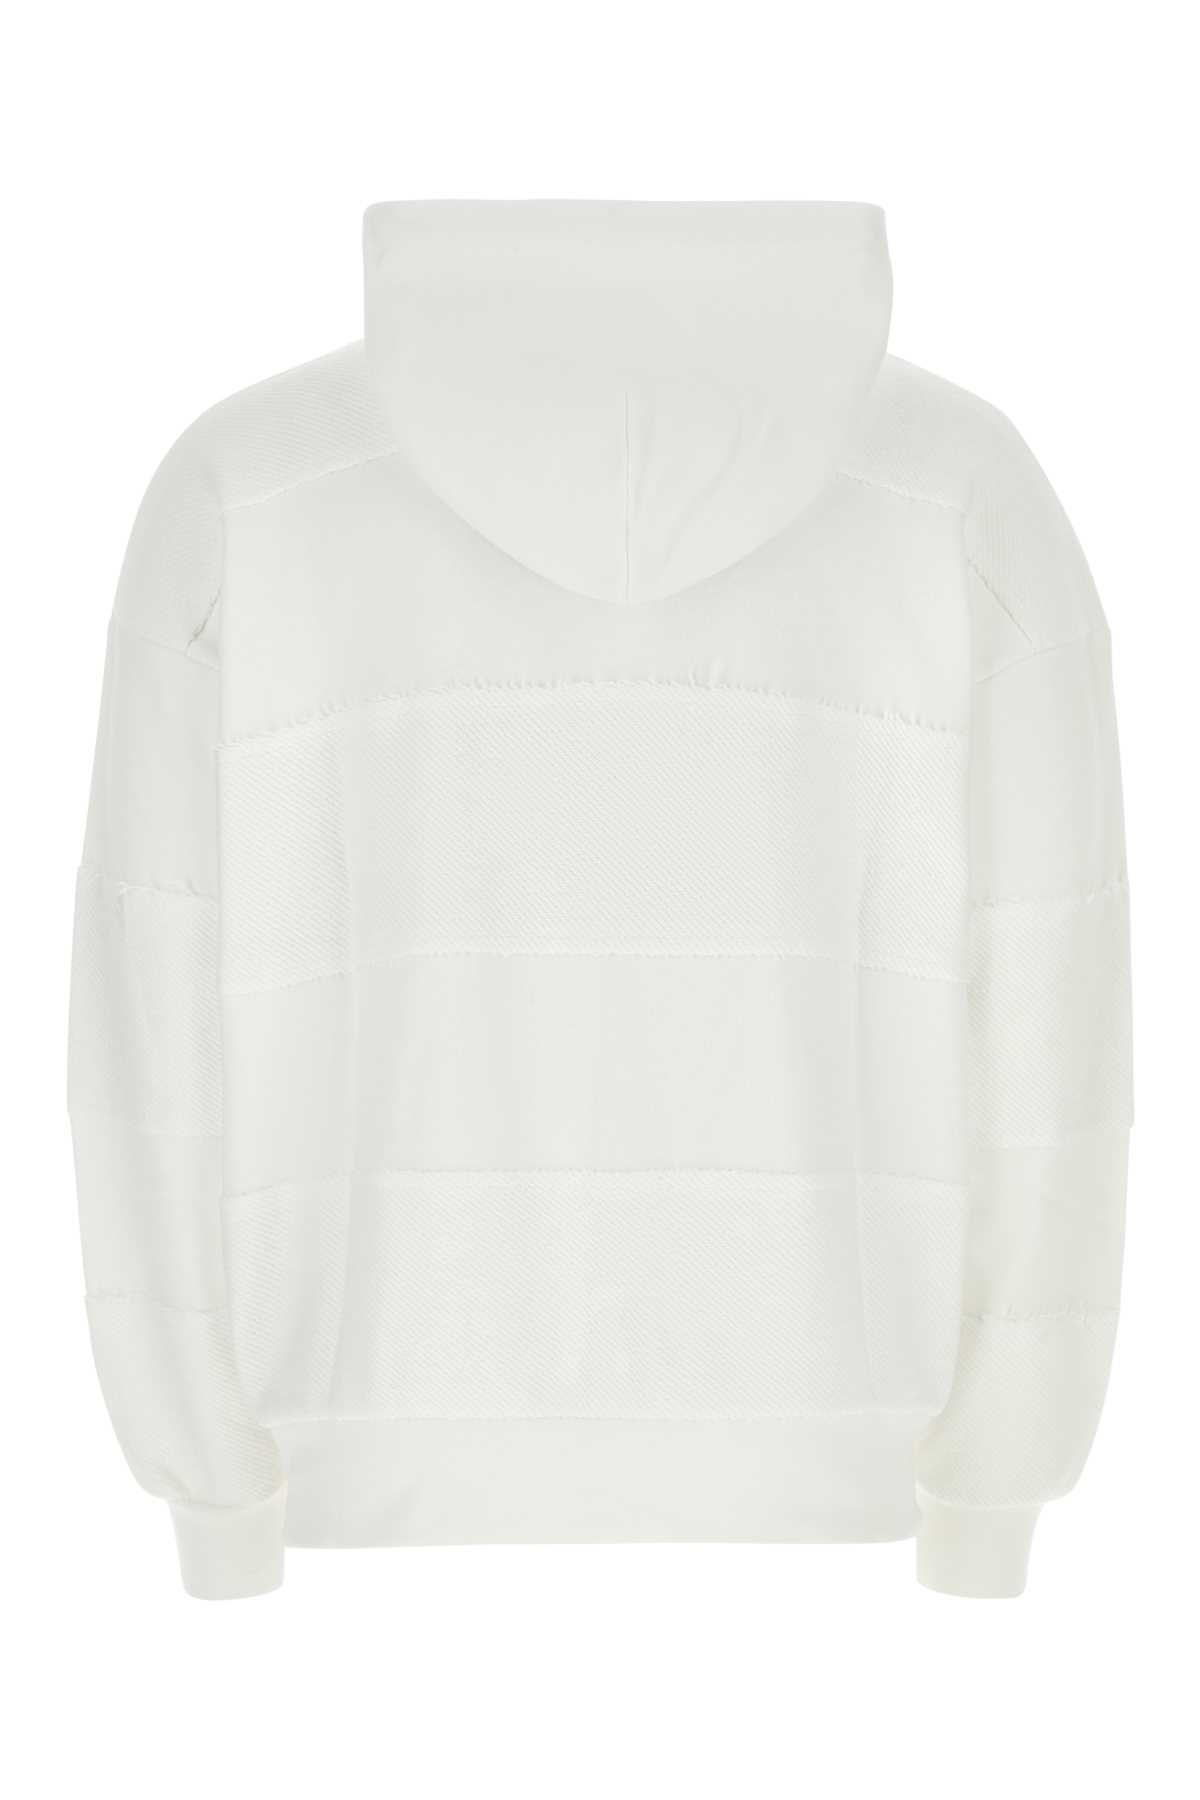 Botter White Cotton Oversize Sweatshirt In Whitonalstr